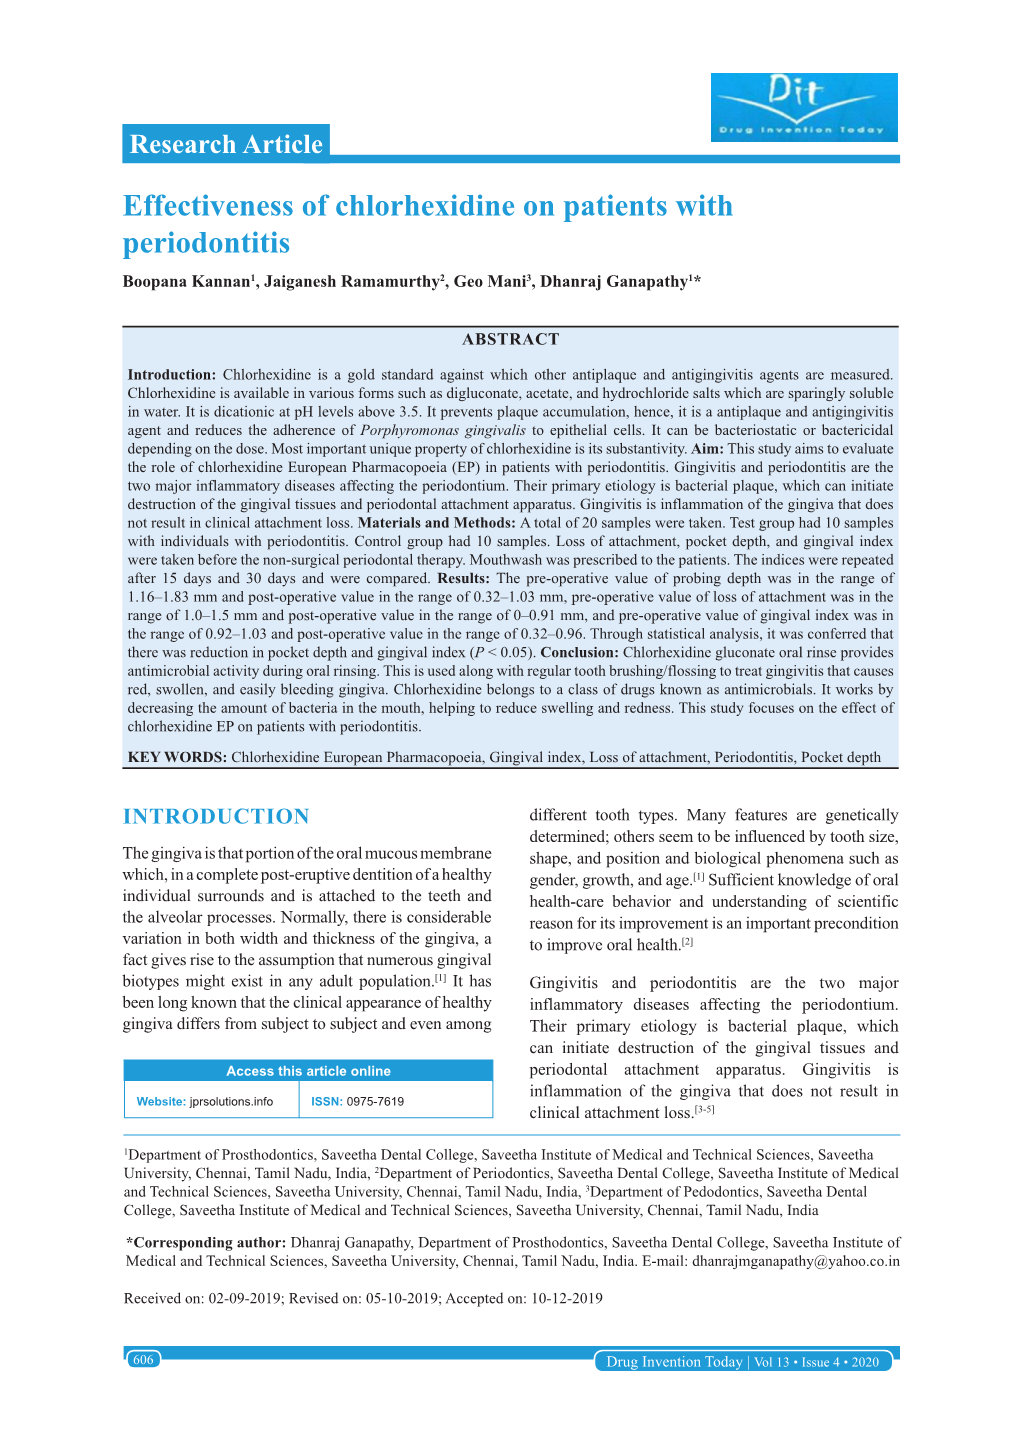 Effectiveness of Chlorhexidine on Patients with Periodontitis Boopana Kannan1, Jaiganesh Ramamurthy2, Geo Mani3, Dhanraj Ganapathy1*